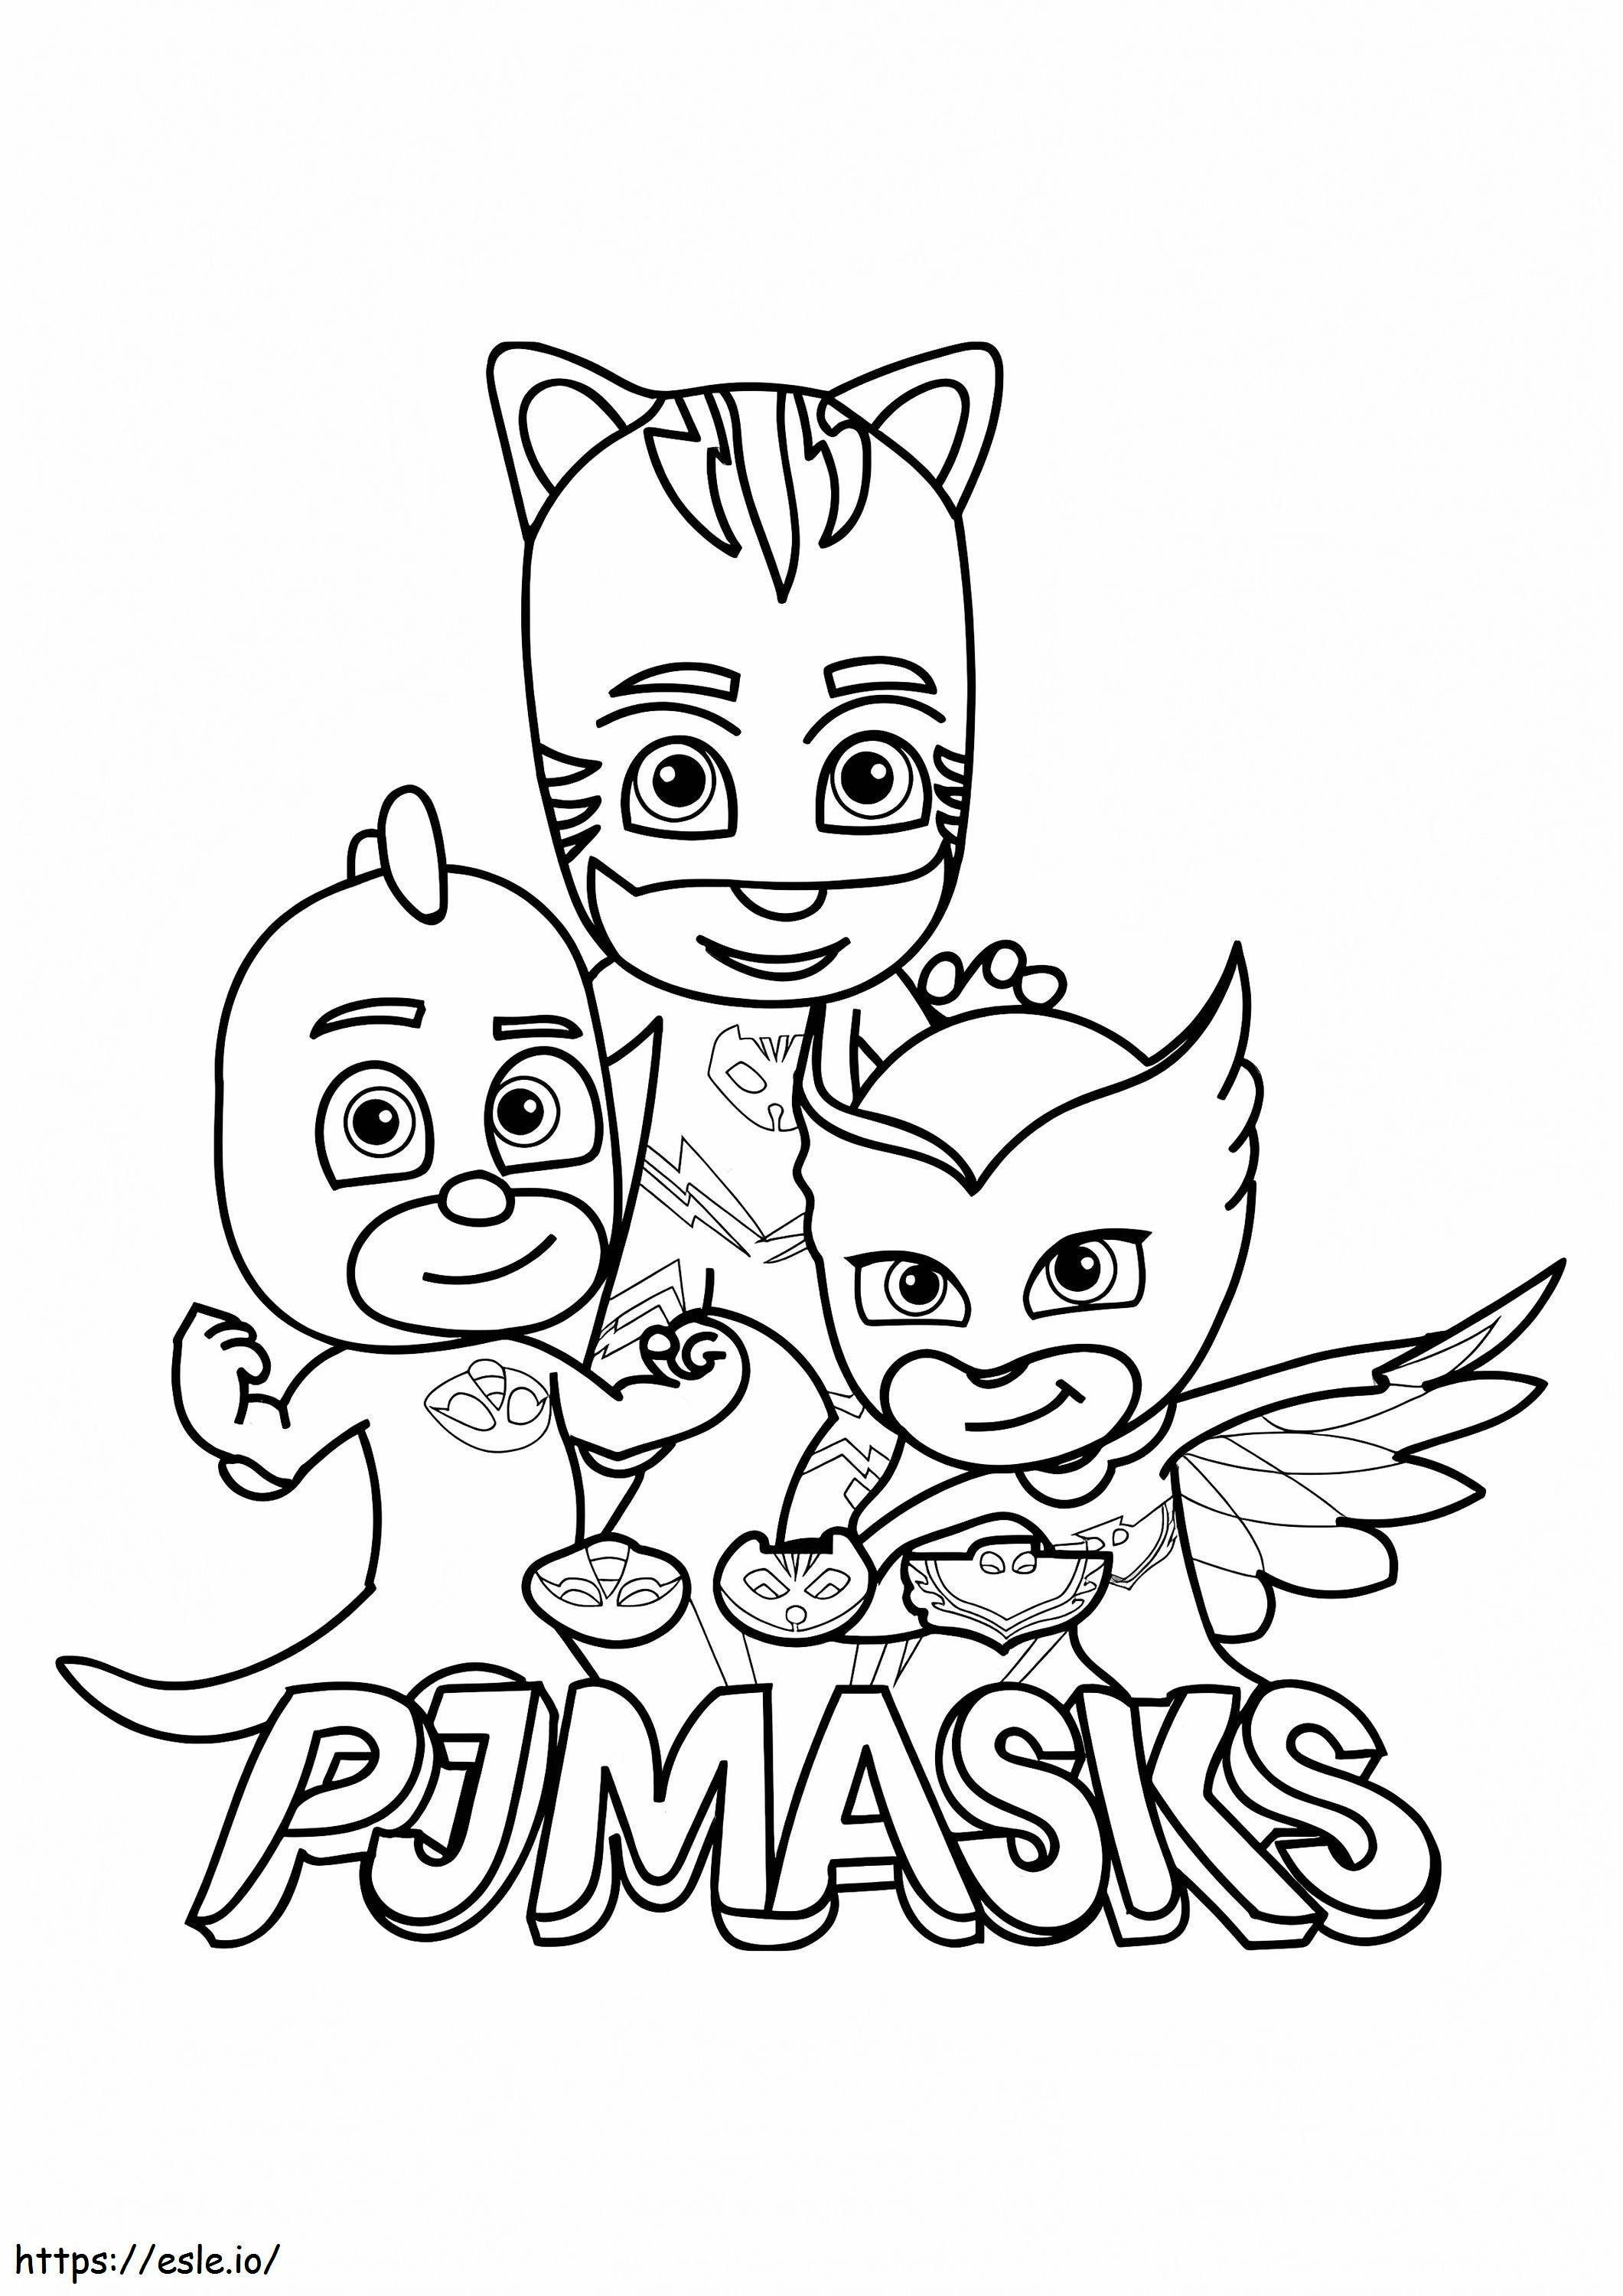 PJ-Maske ausmalbilder